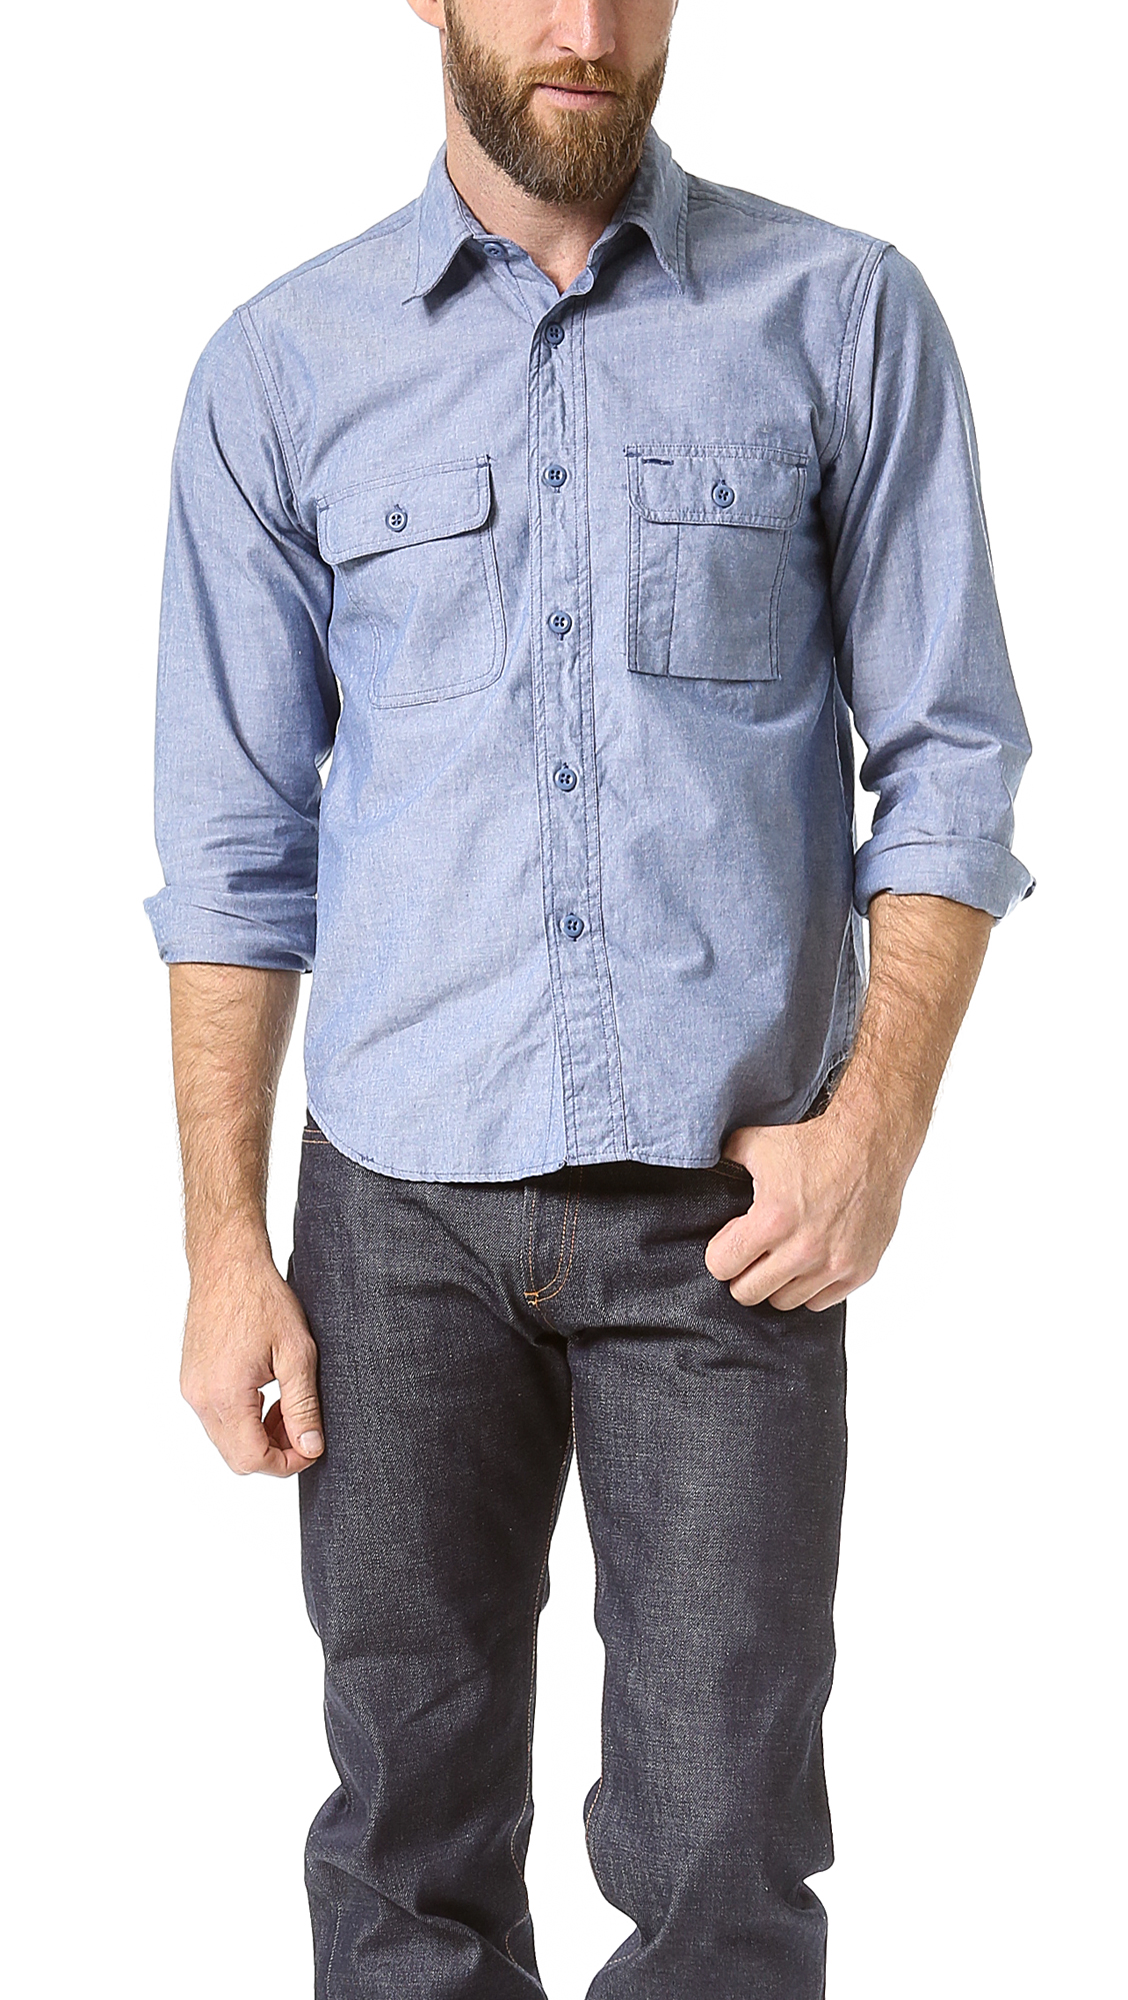 Battenwear Chambray Work Shirt in Light Blue (Blue) for Men - Lyst